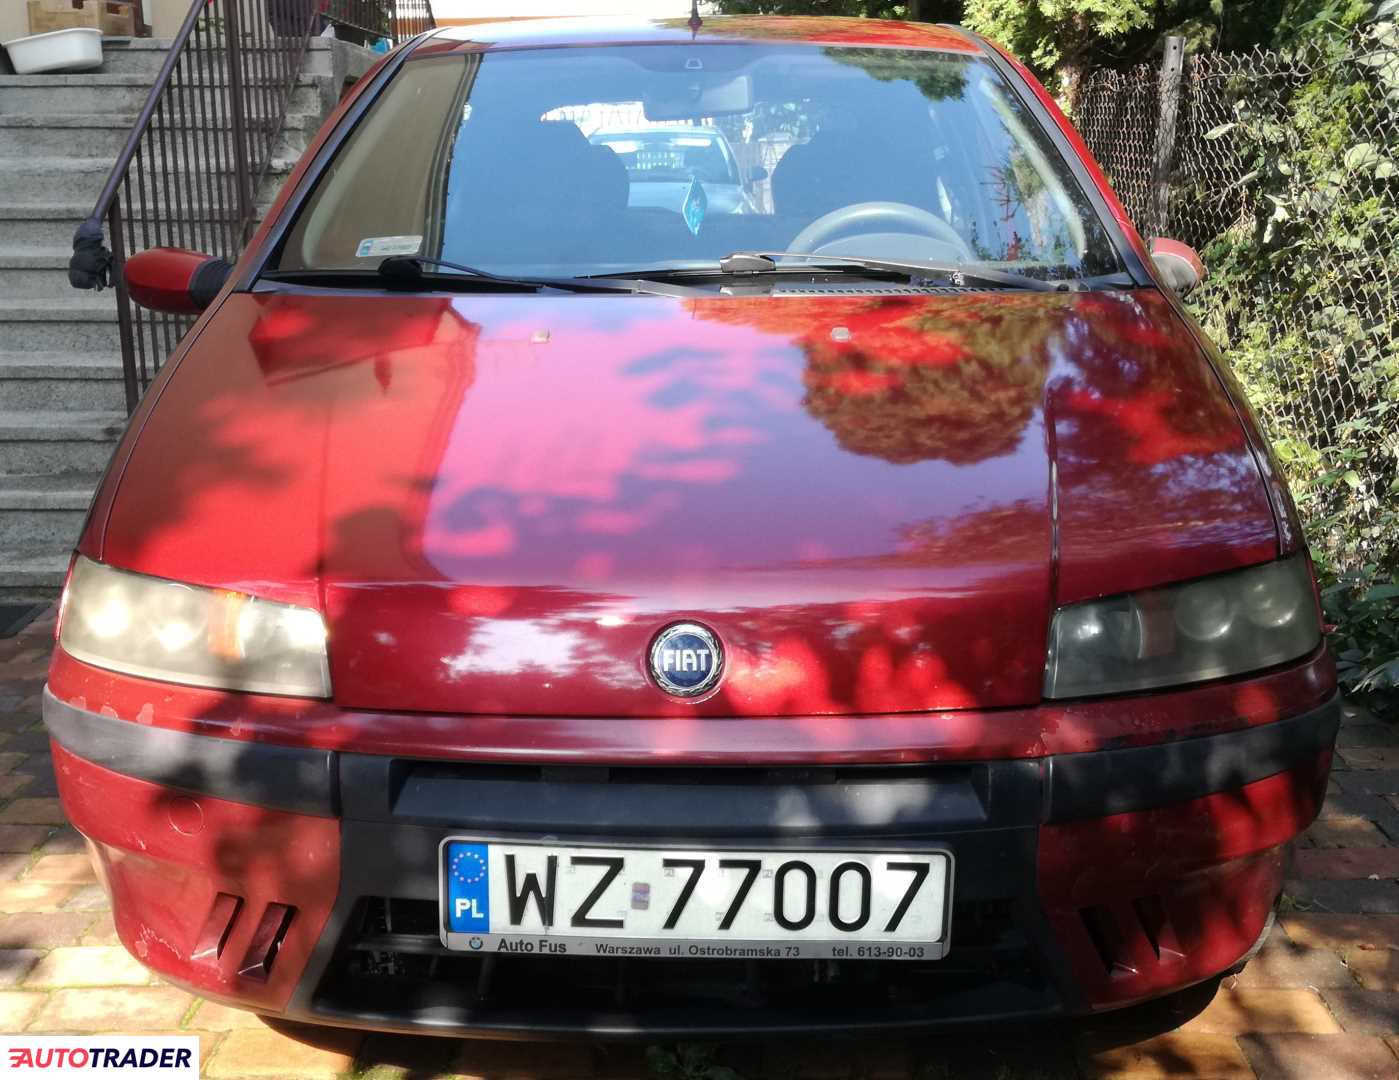 Fiat Punto 2001 1.9